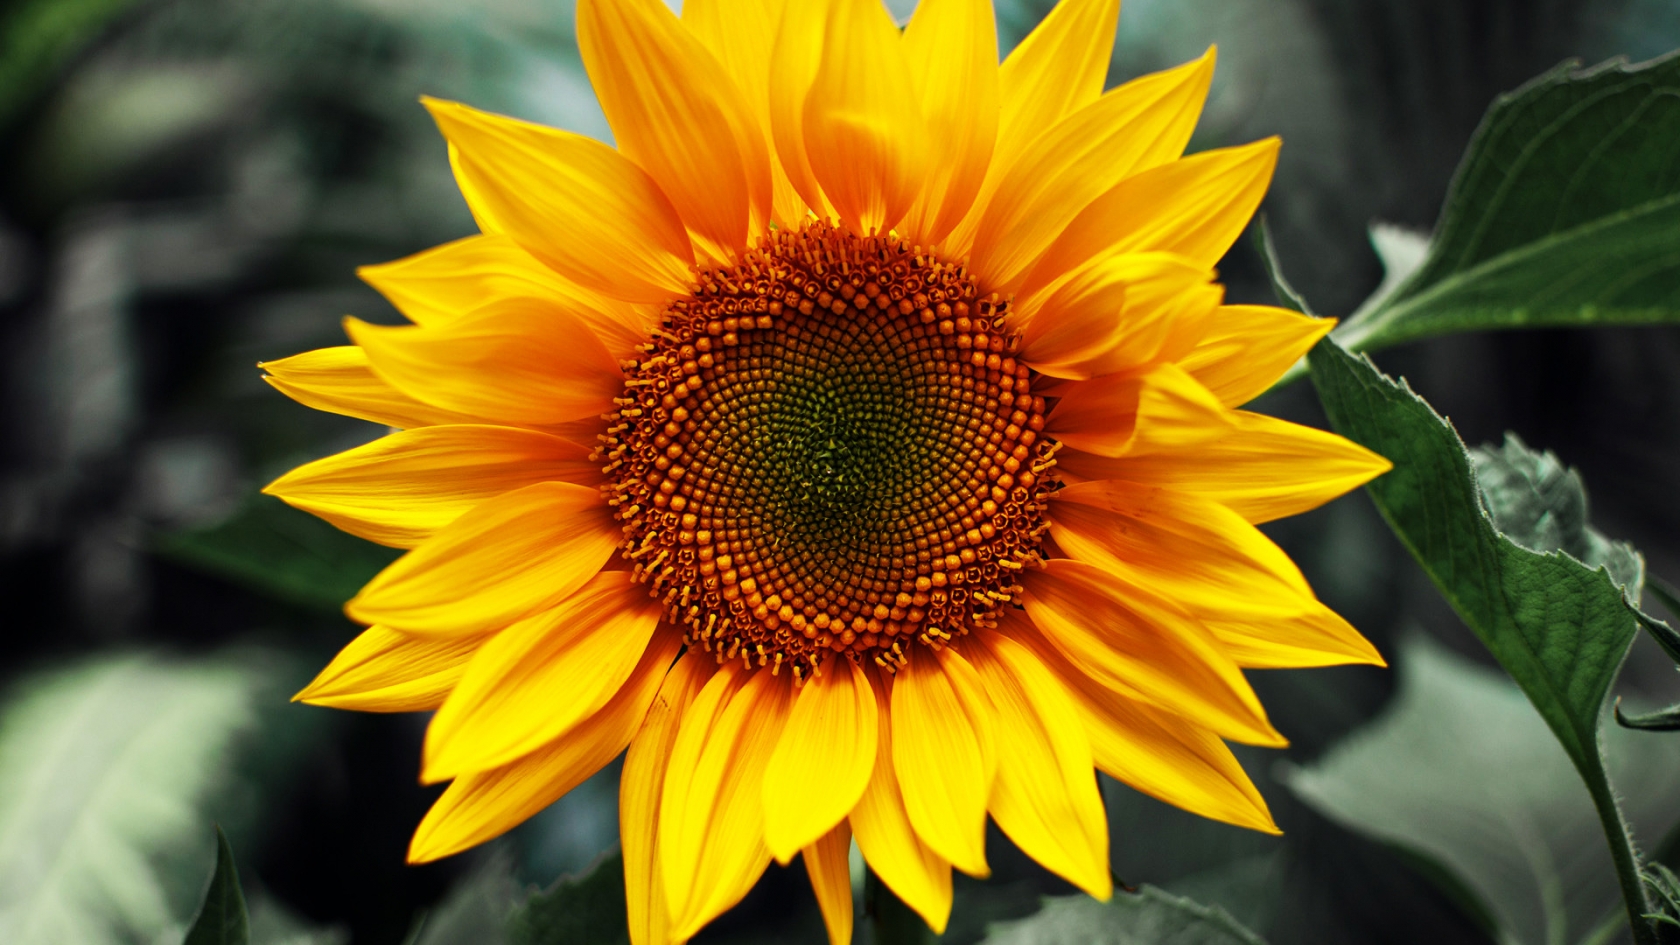 Just Sunflower for 1680 x 945 HDTV resolution